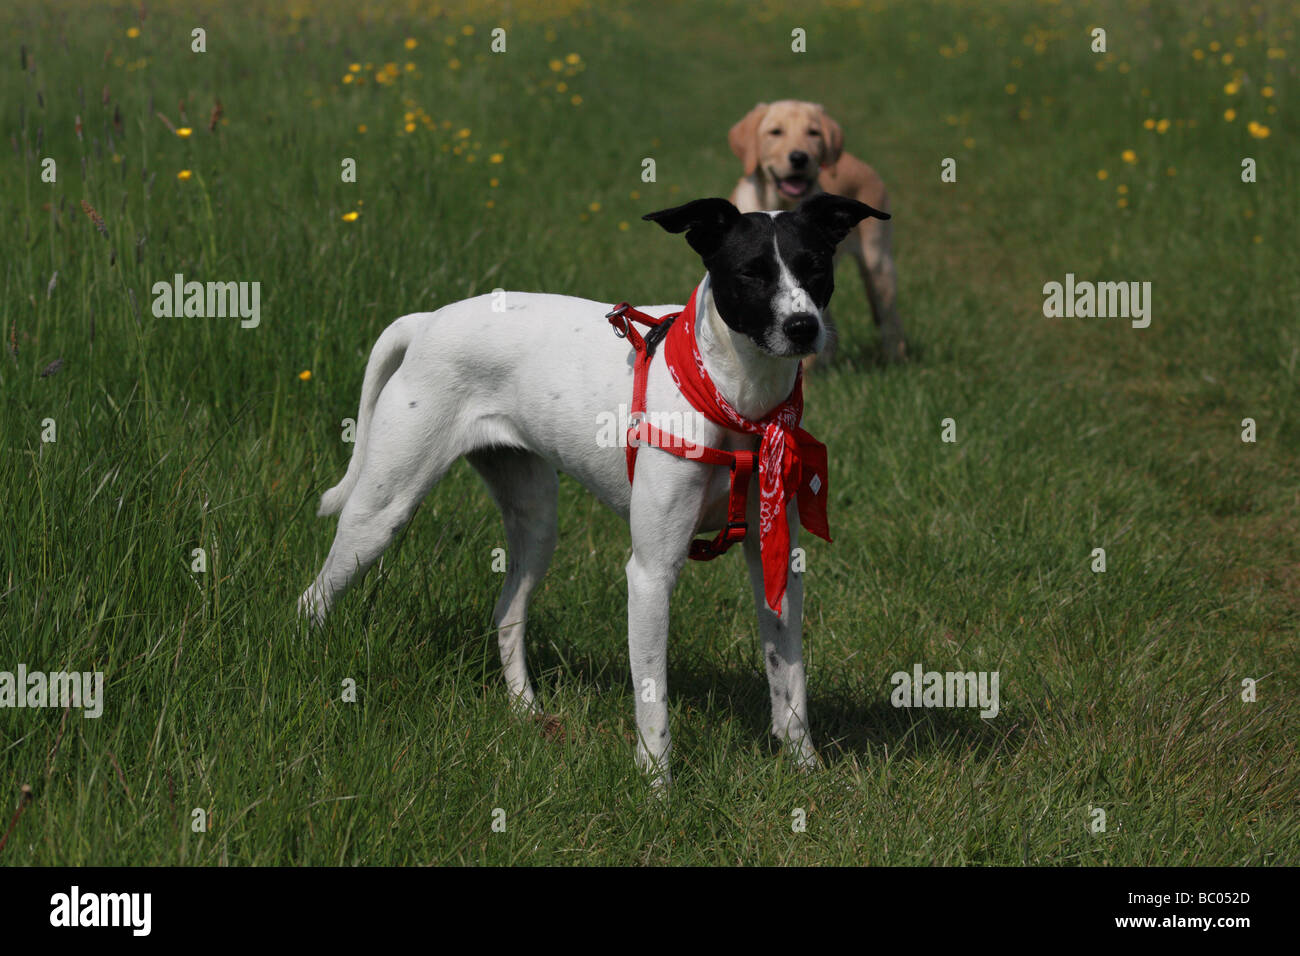 Thoroughbred,Mixed-razza cane,Labrador Retriever Foto Stock